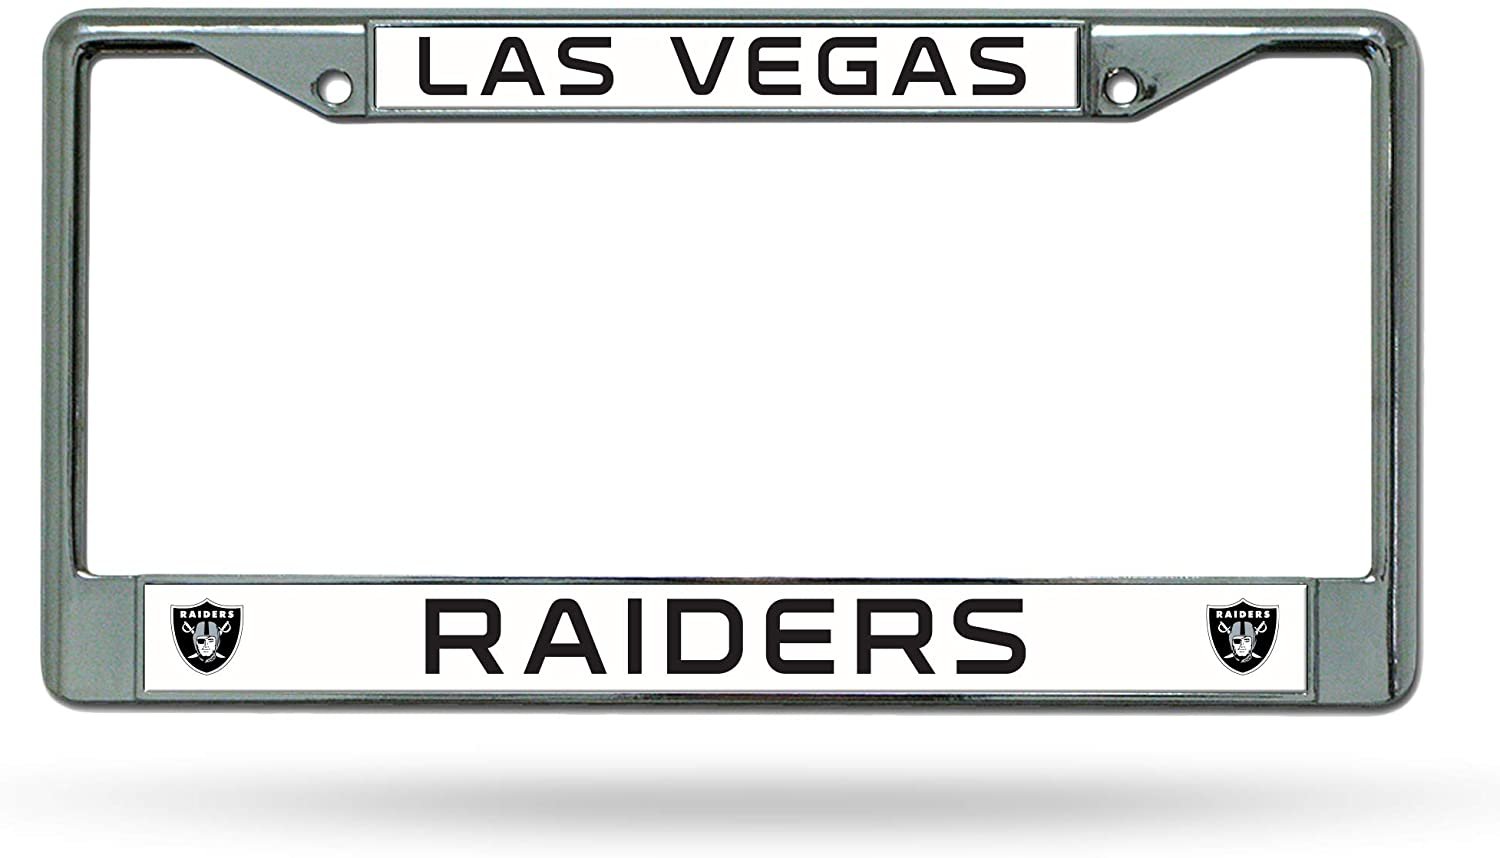 Las Vegas Raiders Metal License Plate Frame Chrome Tag Cover, 12x6 Inch